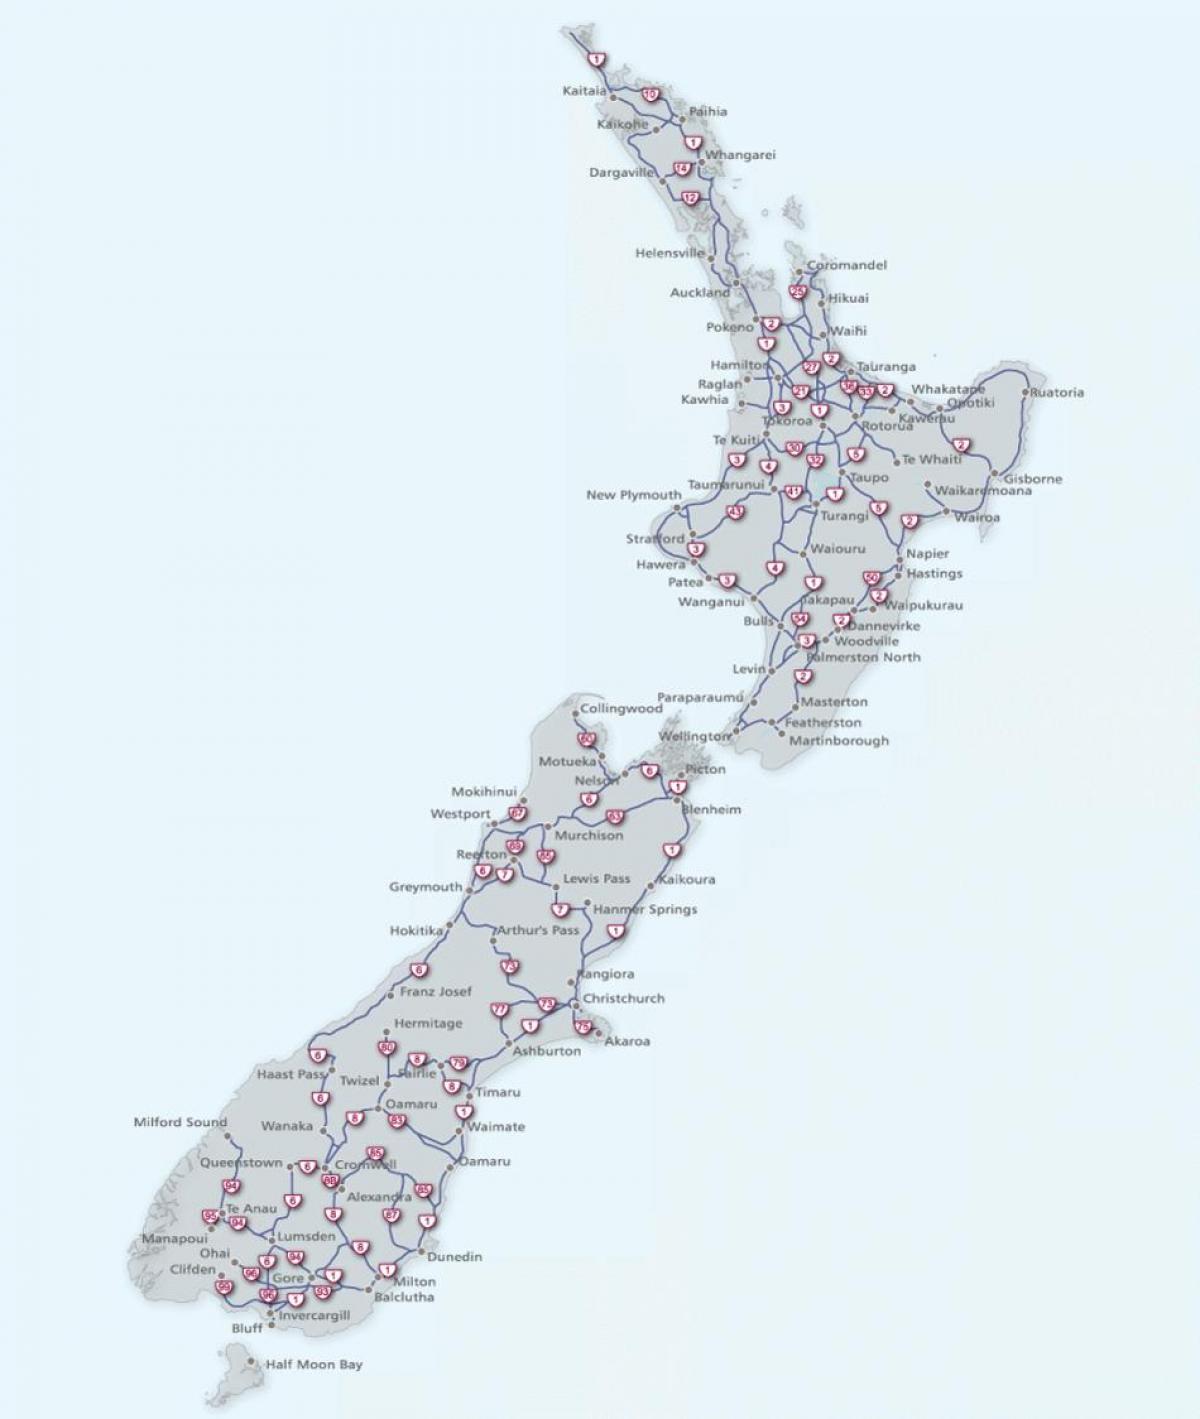 Mappa stradale della Nuova Zelanda